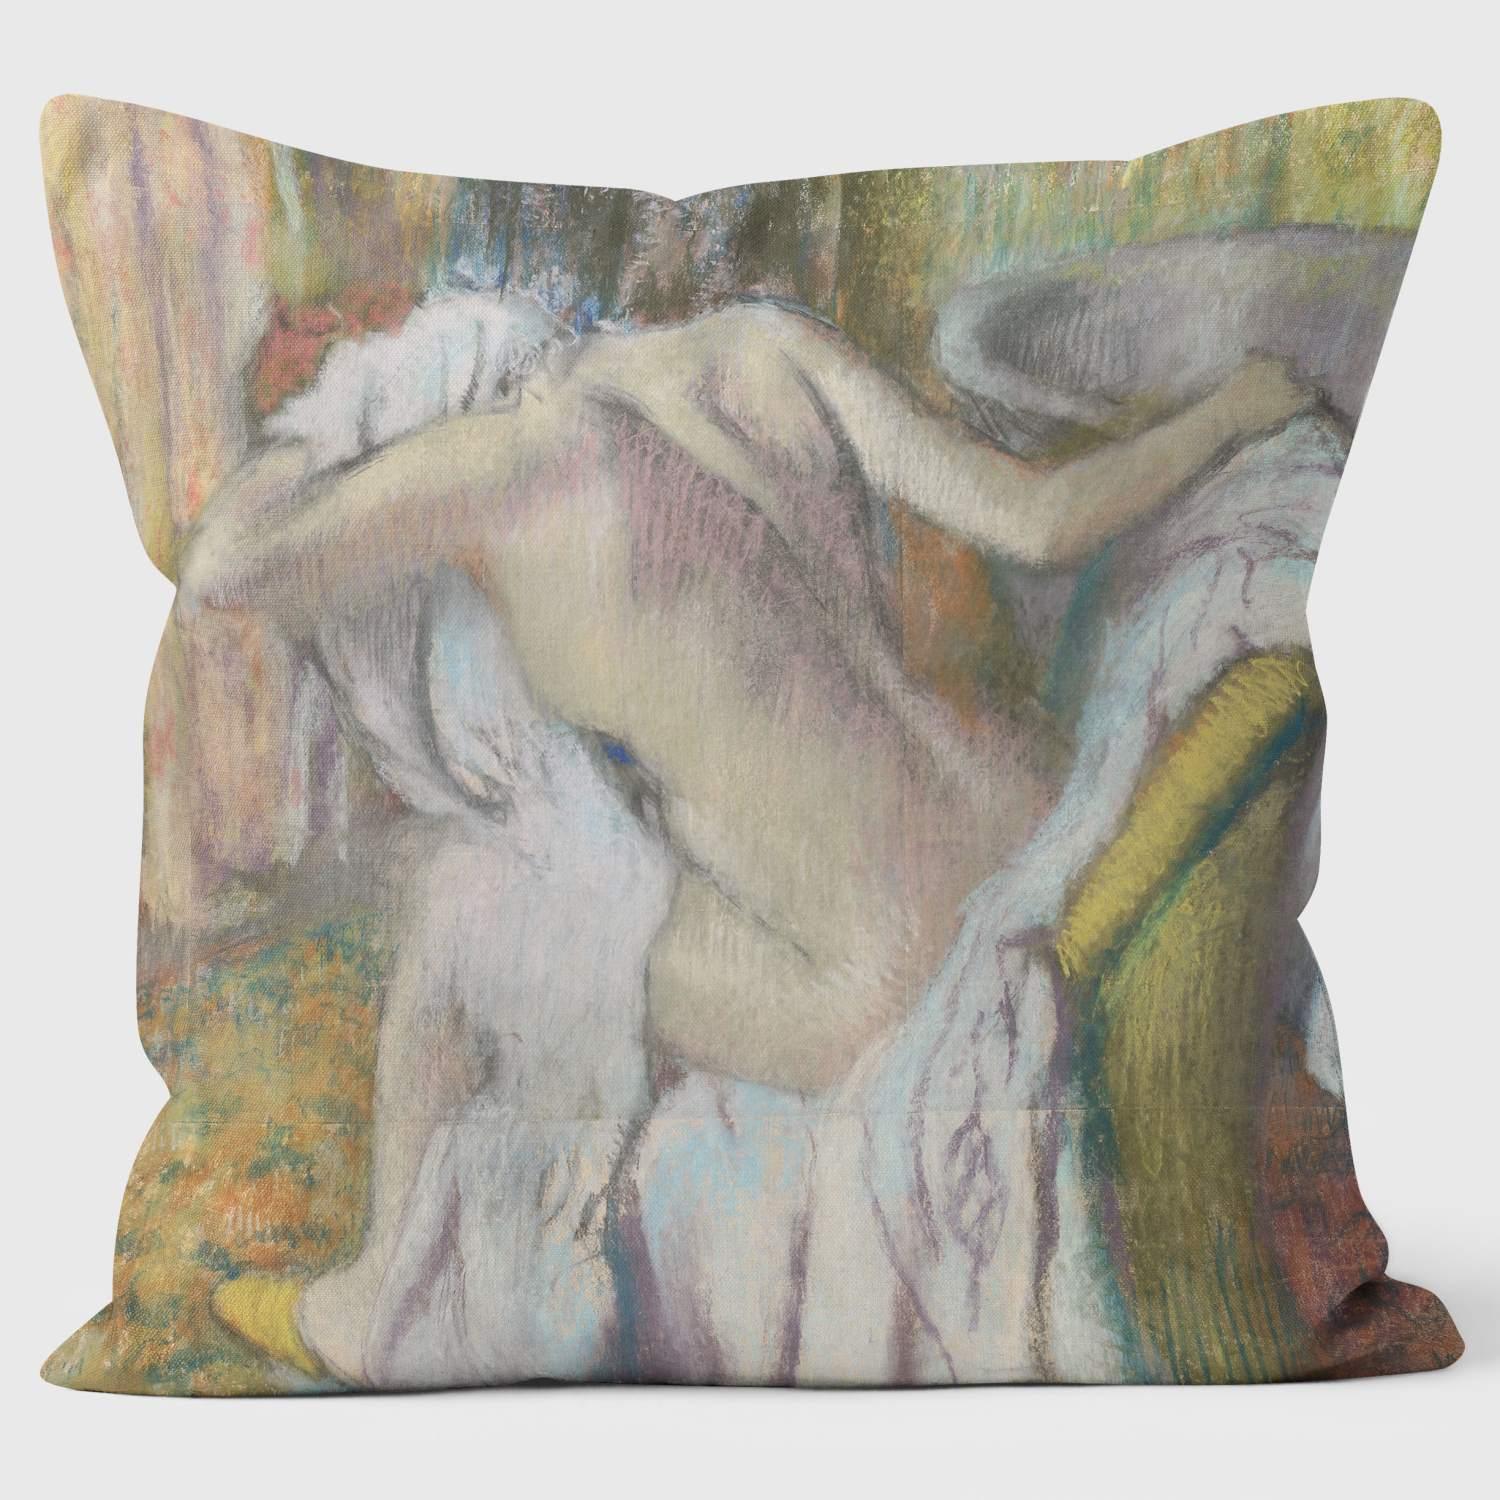 Edgar Degas - After the Bath - National Gallery Cushion - Handmade Cushions UK - WeLoveCushions